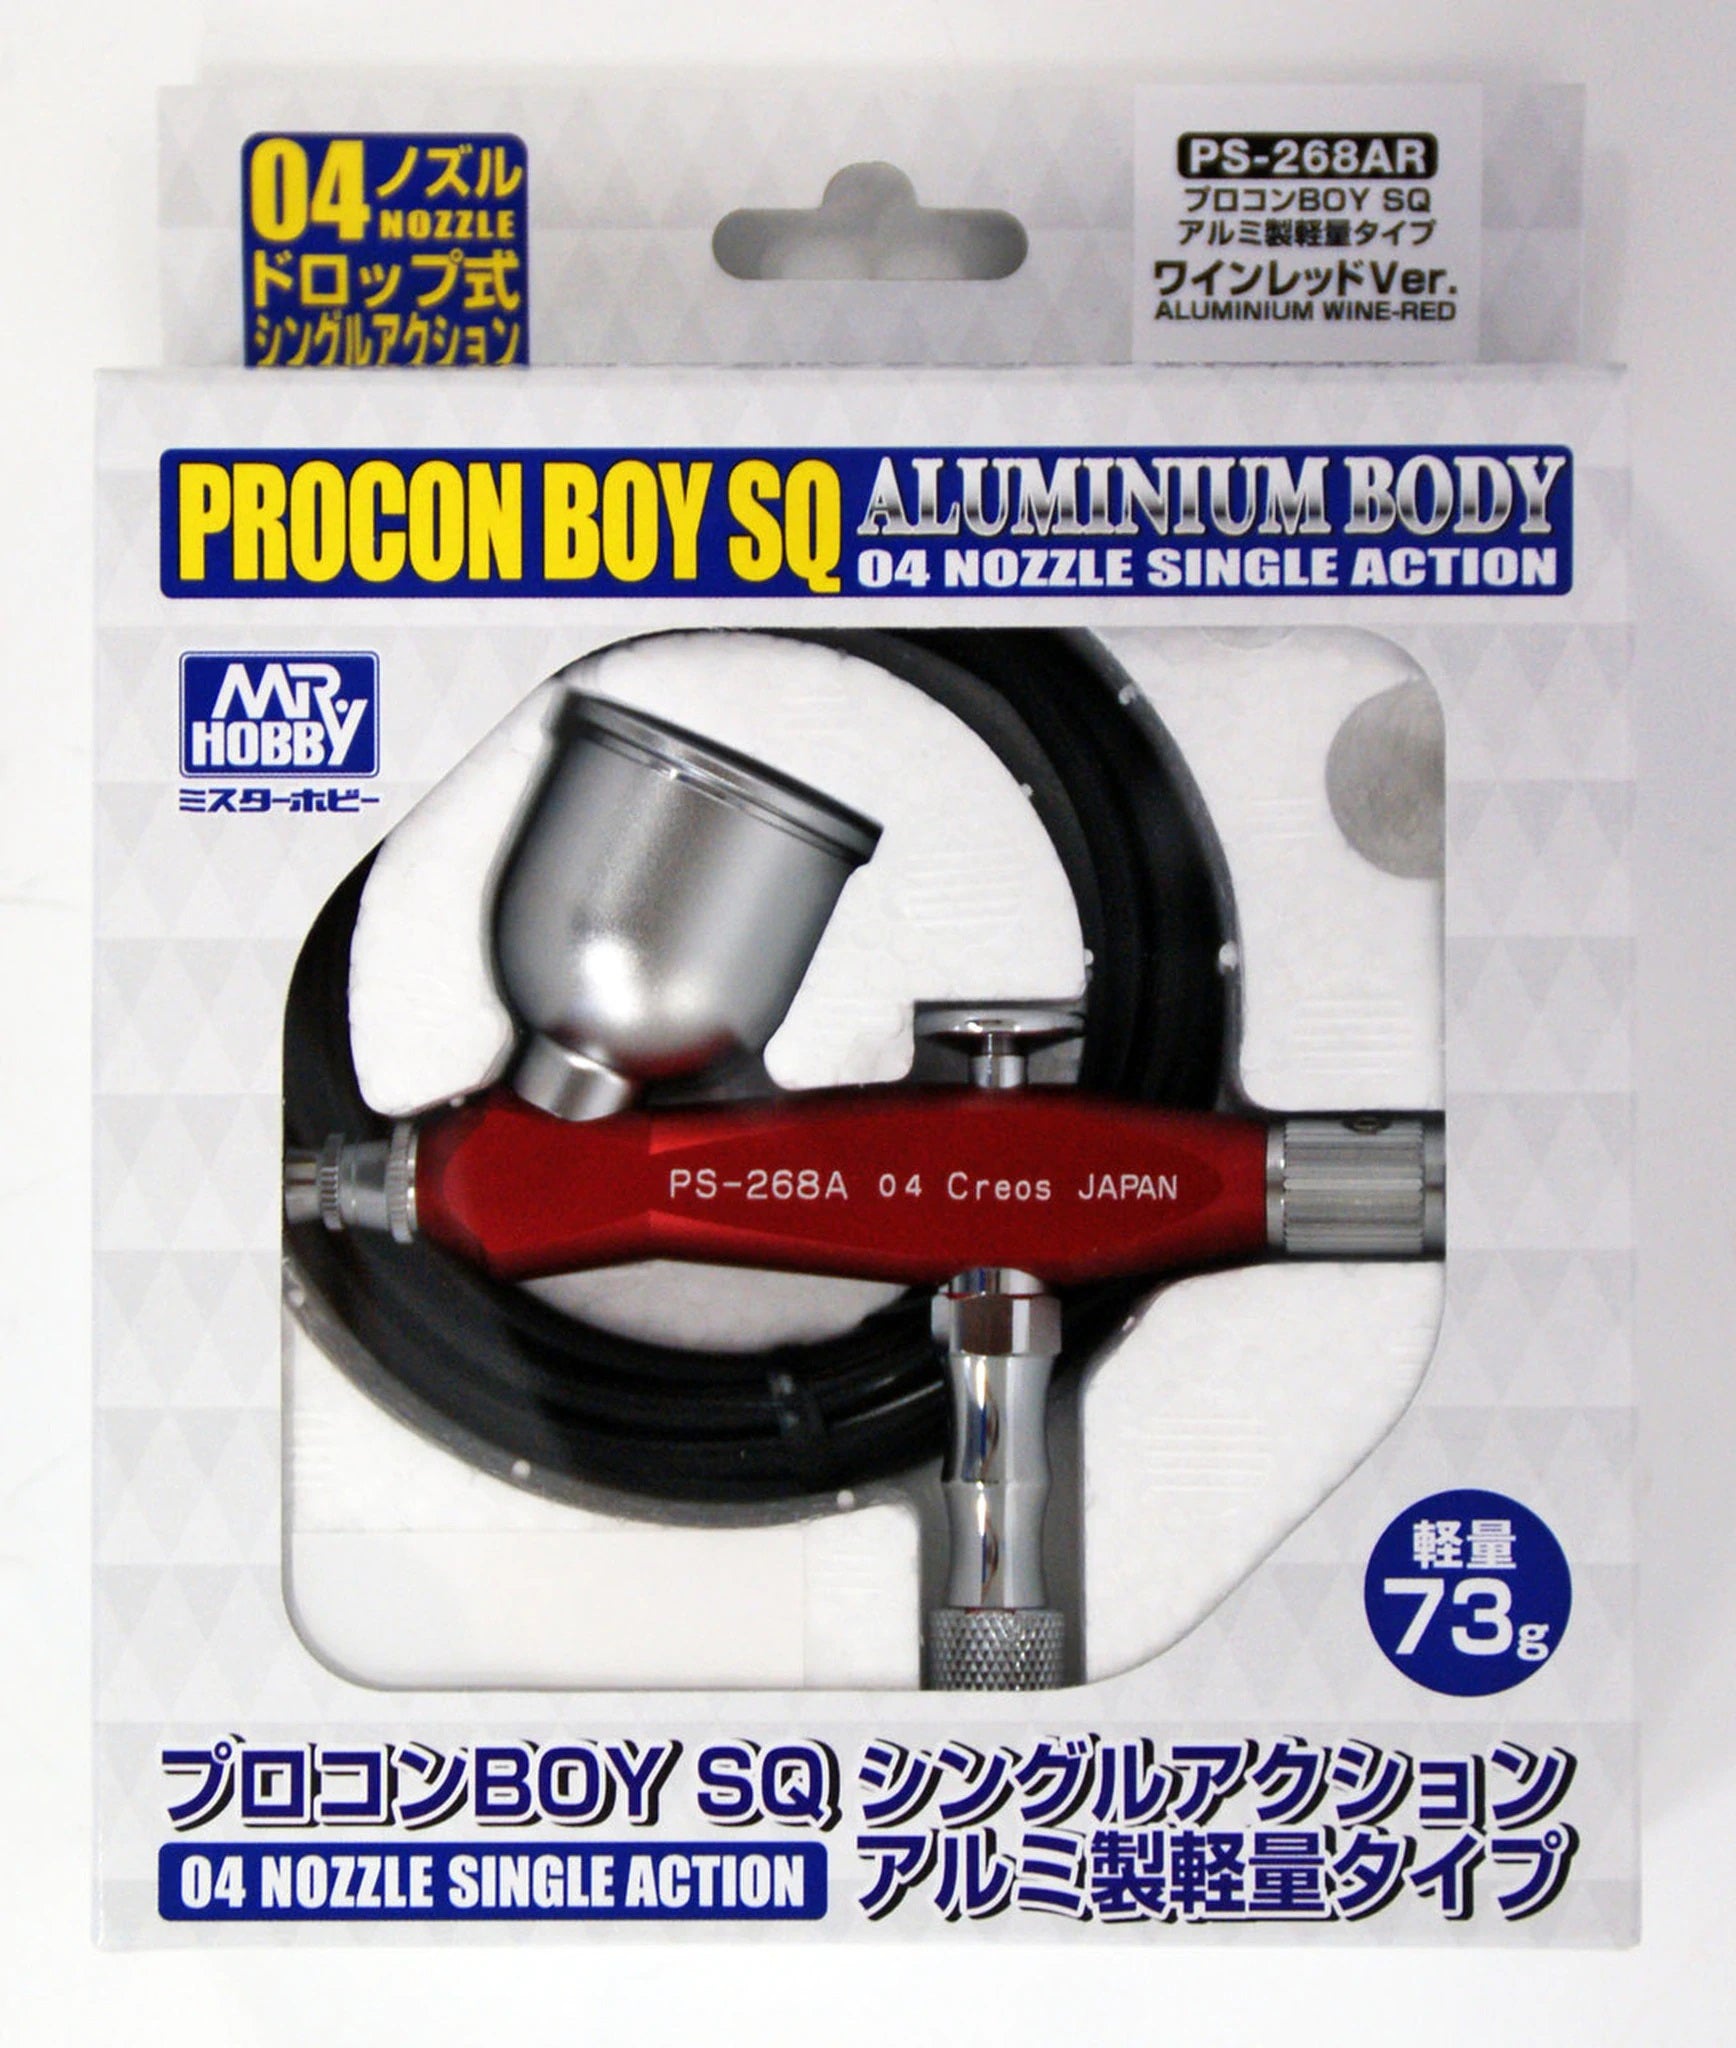 Mr. Airbrush - Procon Boy PS-268AR 0.4 Single Action